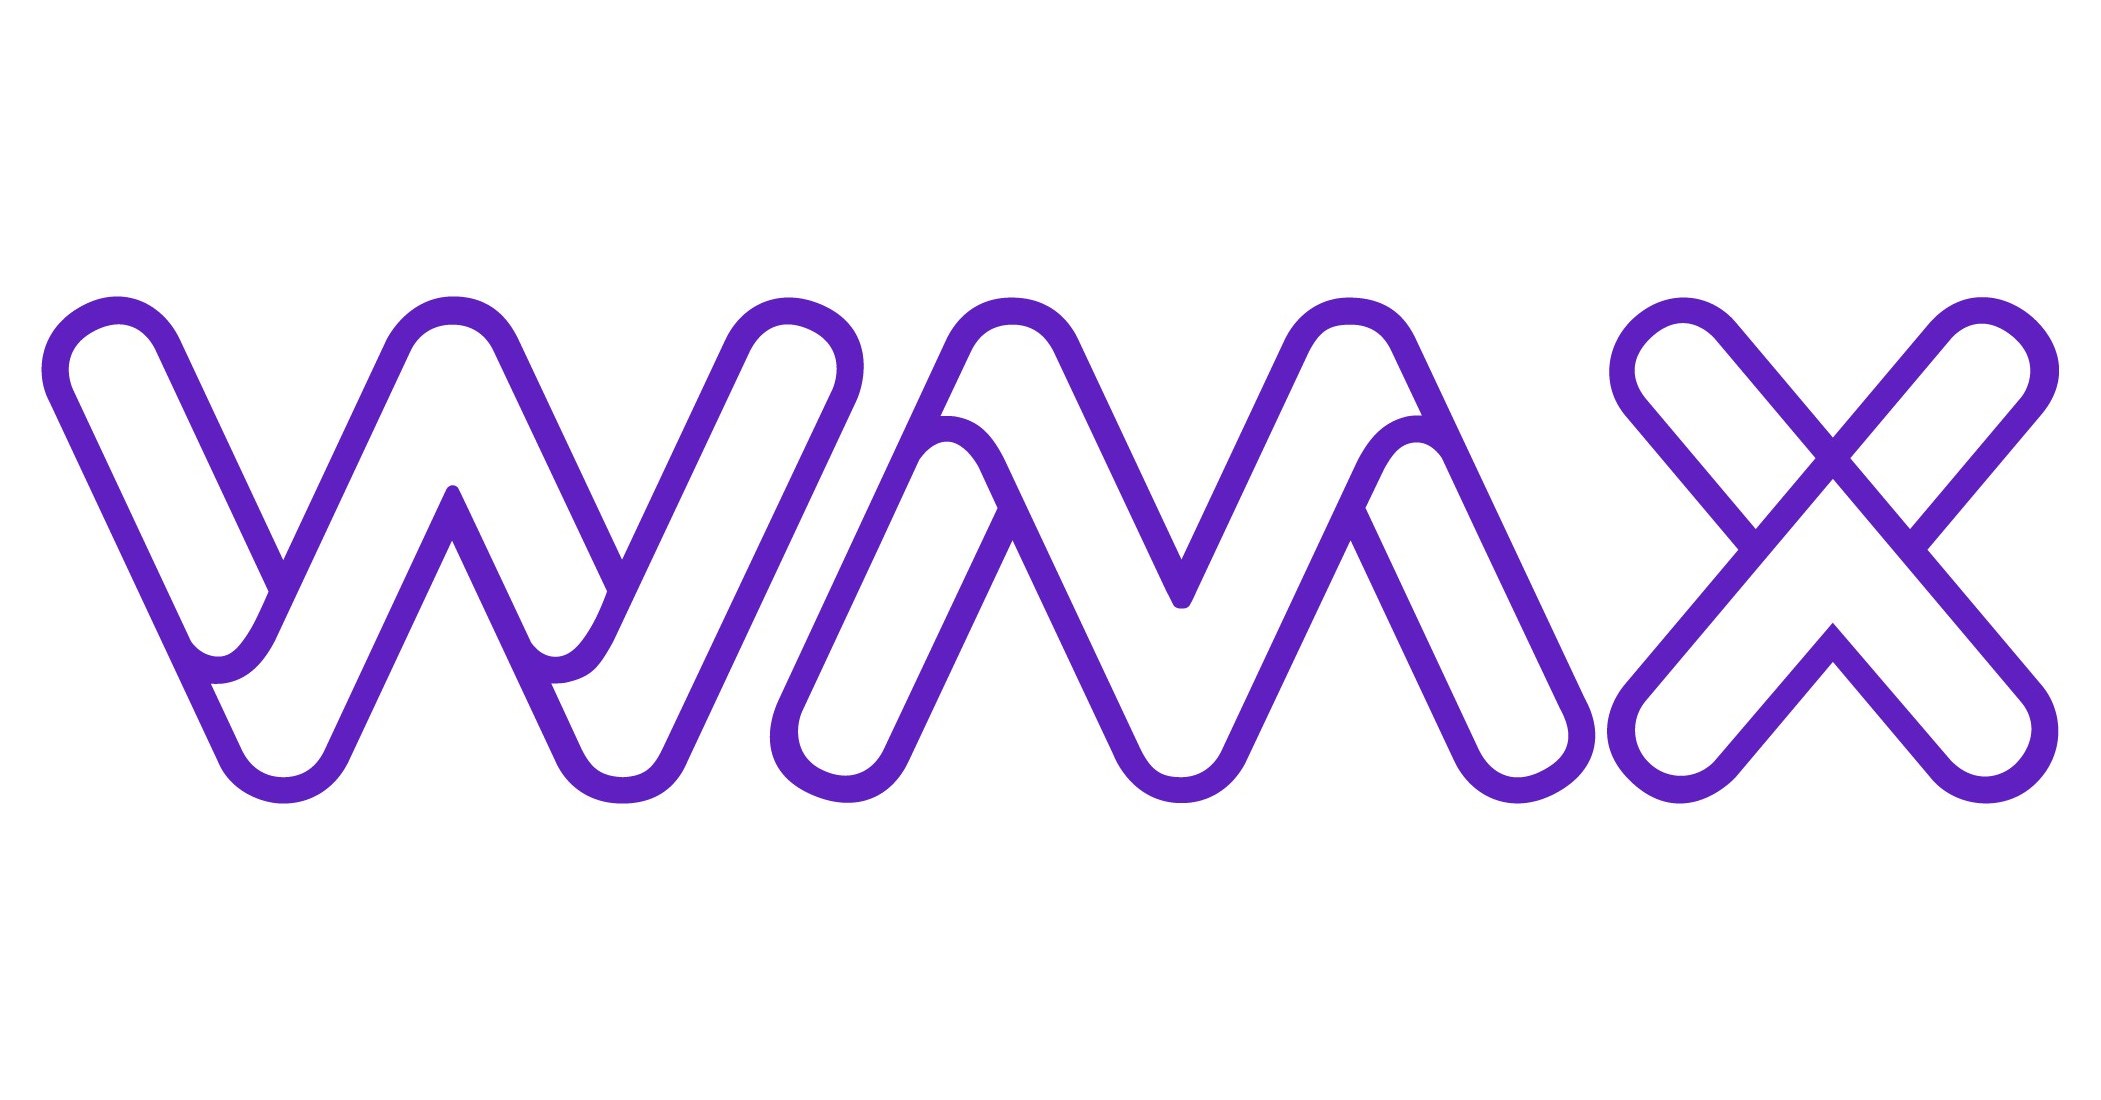 Music Biz Member Warner's WMX Launches Three Music Channels on